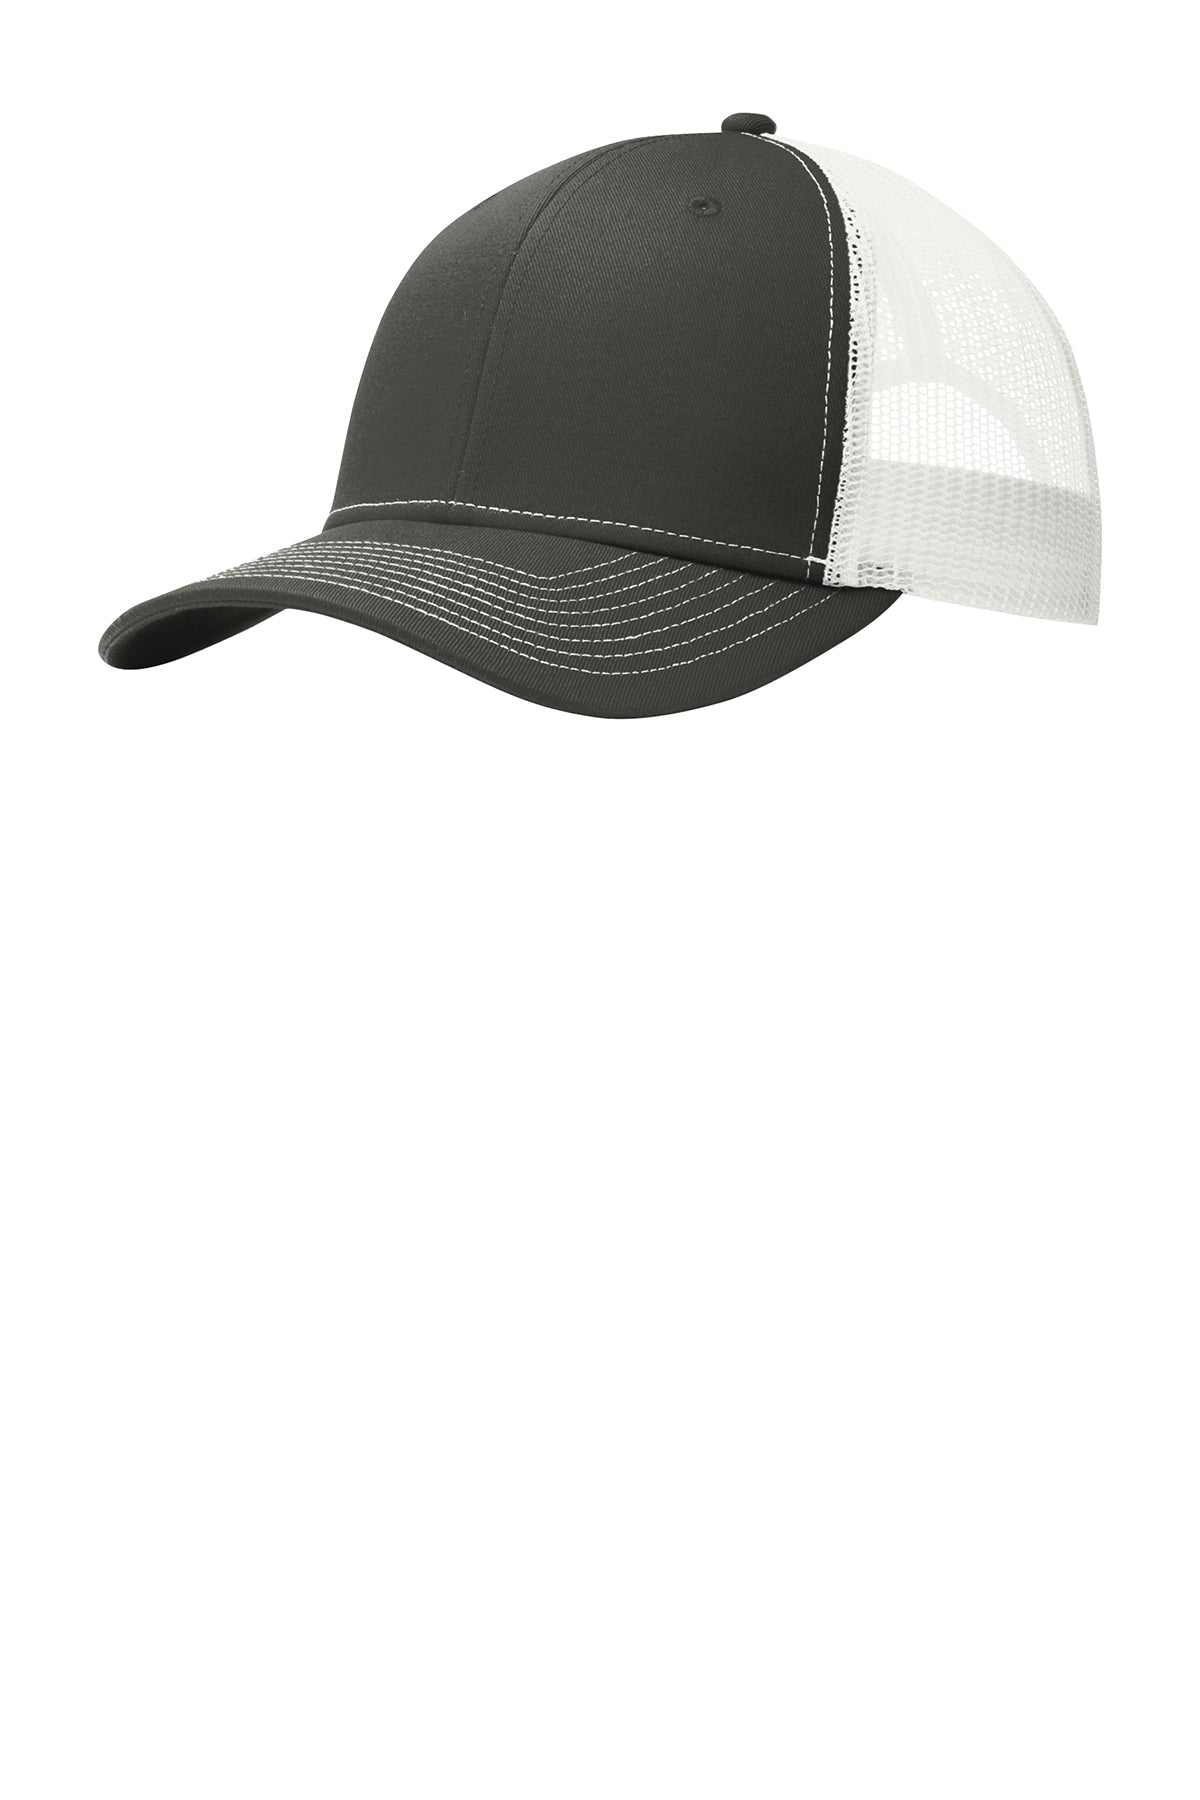 Port Authority Snapback Trucker Branded Caps, Grey Steel/ White